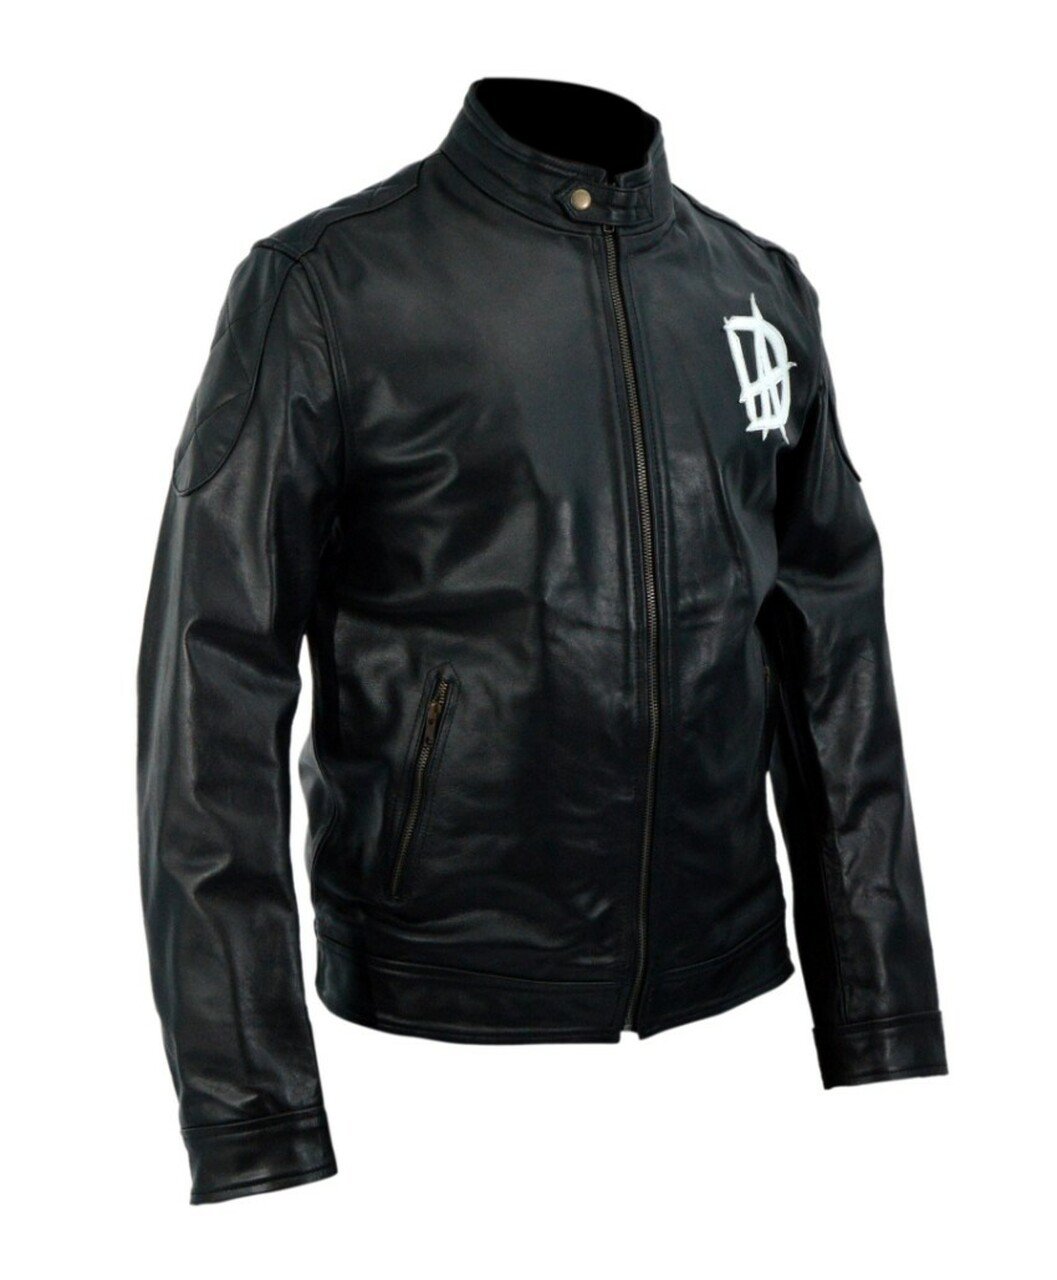 Dean Ambrose WWE Black Leather Jacket